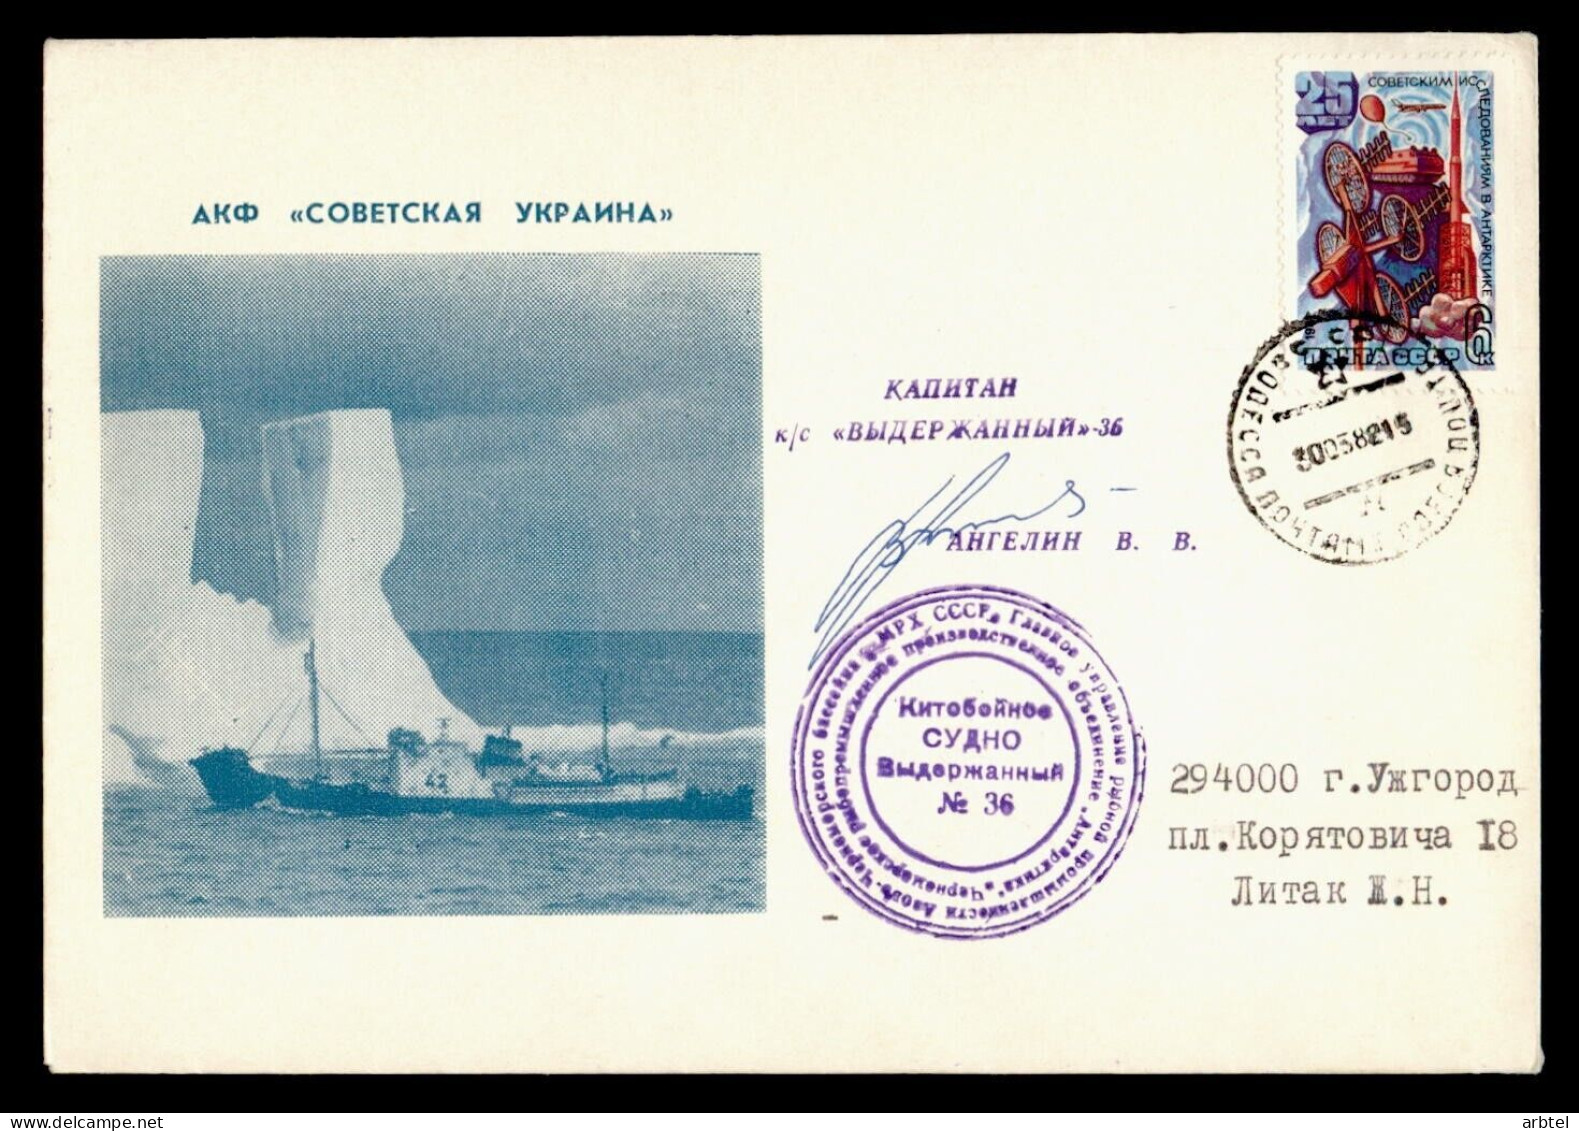 URSS SOVIET UNION ANTARCTIC ANTARTIDA BUQUE BALLENERO WAHLING SHIP WHAKER - Fauna Antartica